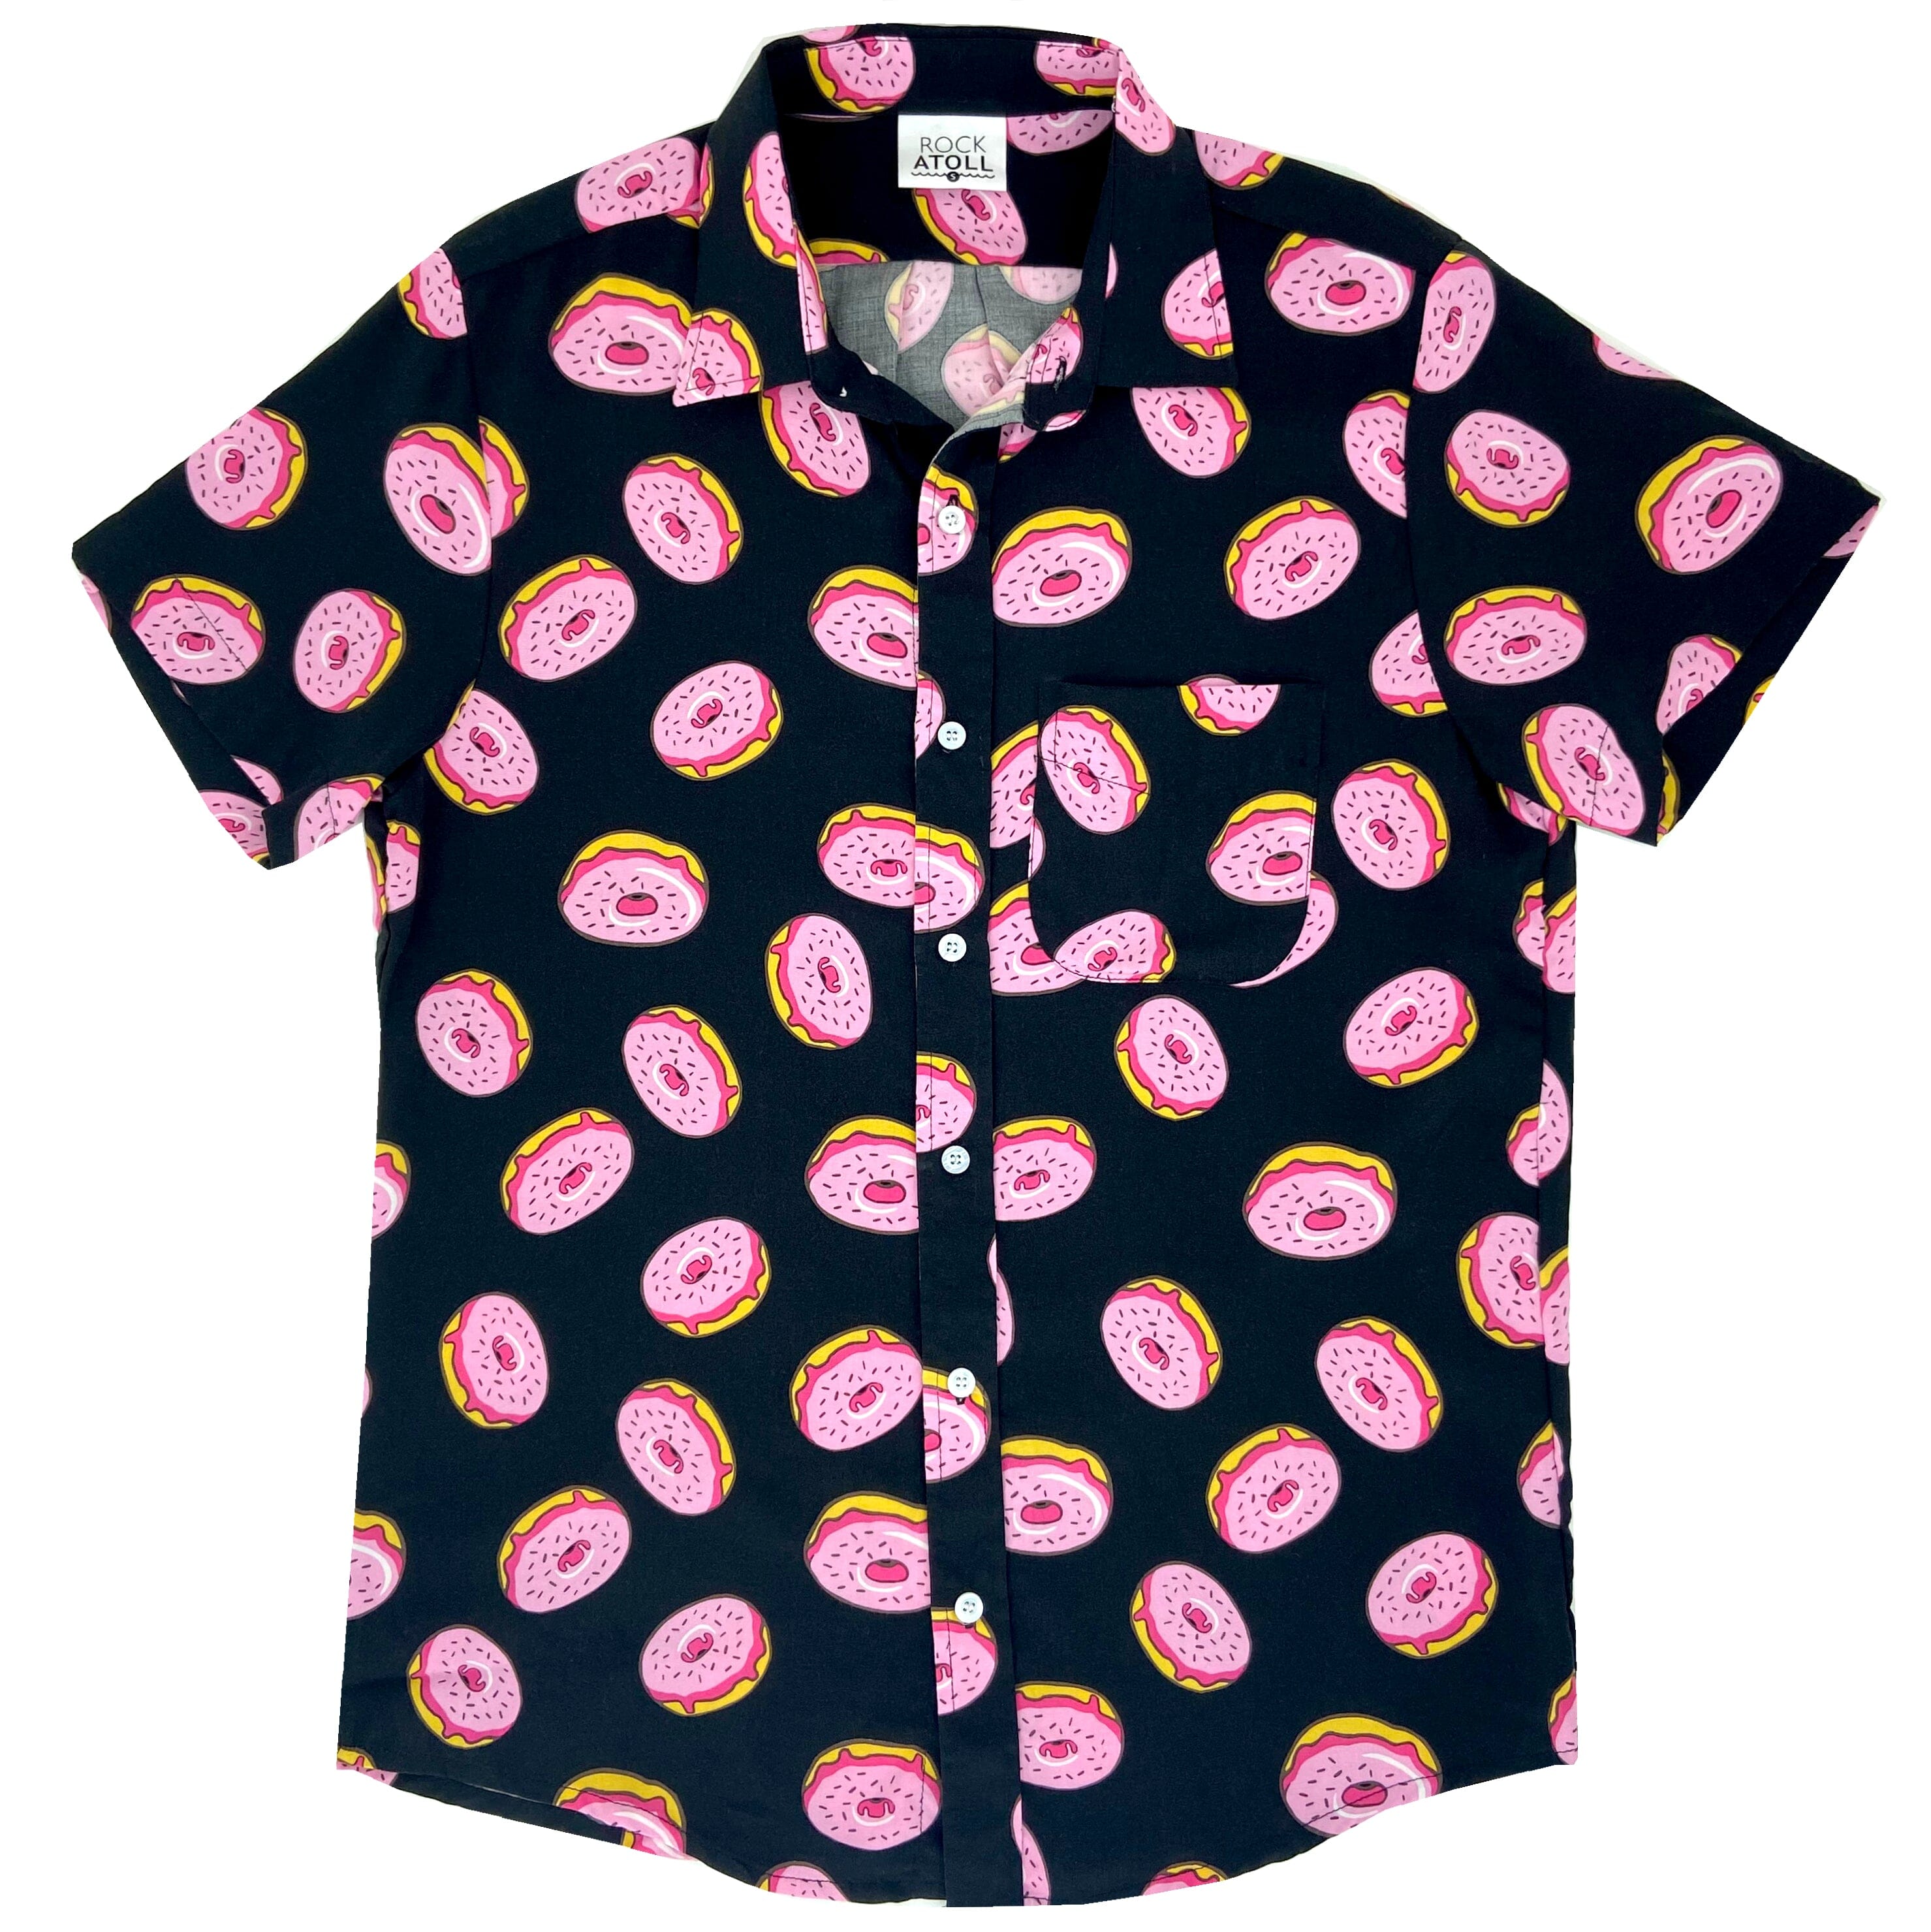 Men's Food Themed Sugary Donut Patterned Button Down Hawaiian Shirt